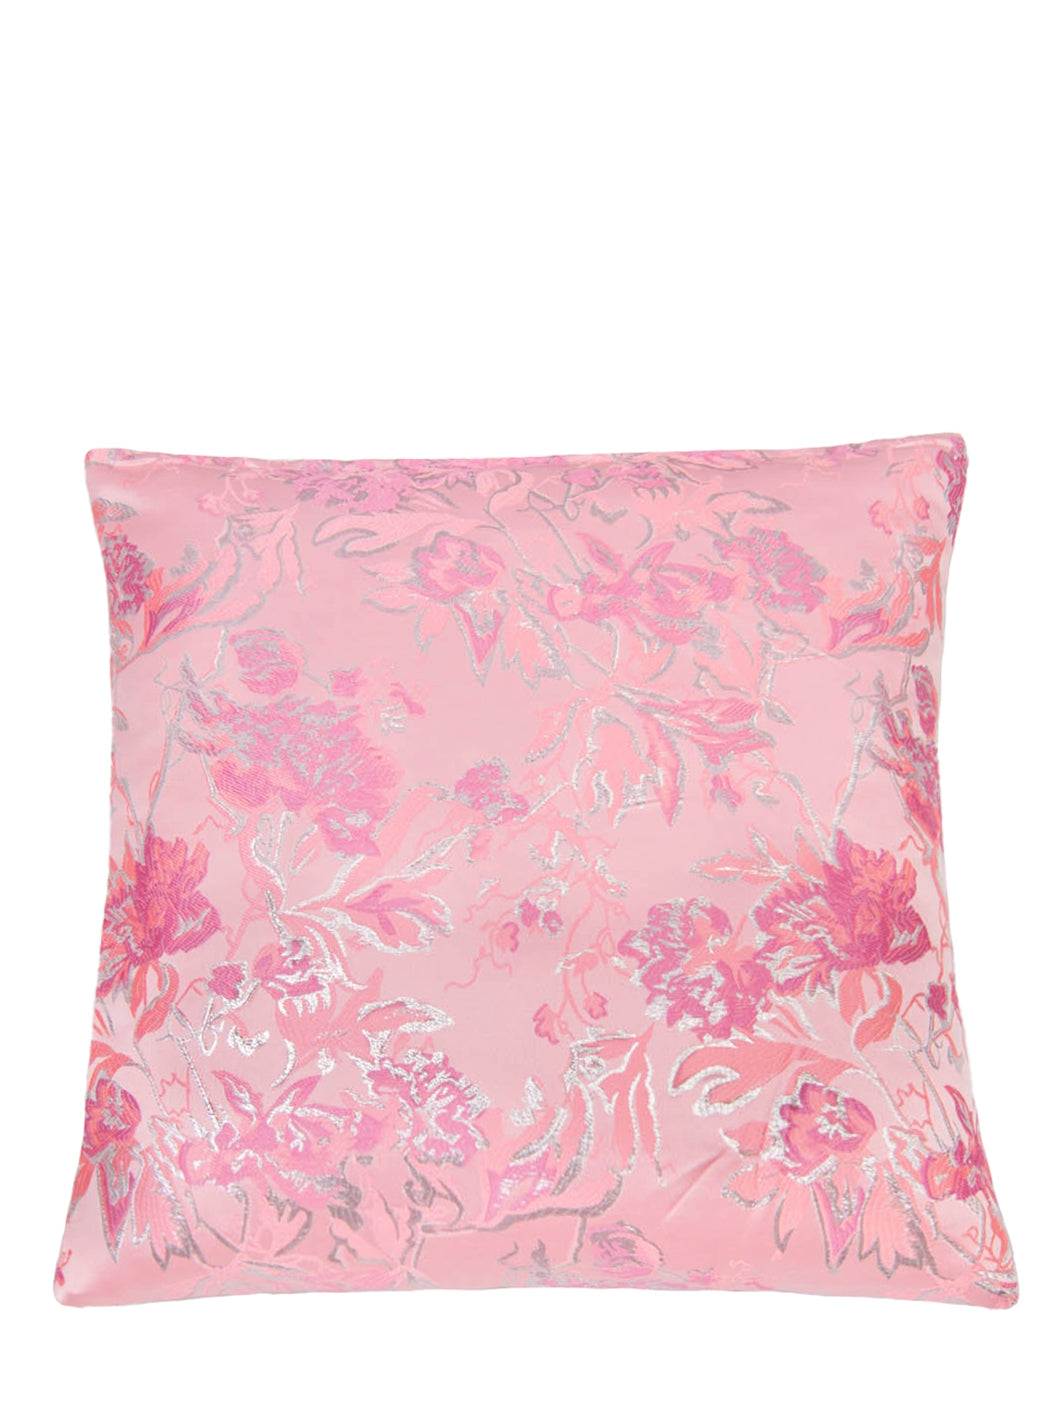 Floral jacquard cushion (50x50 cm), rose & silver lurex